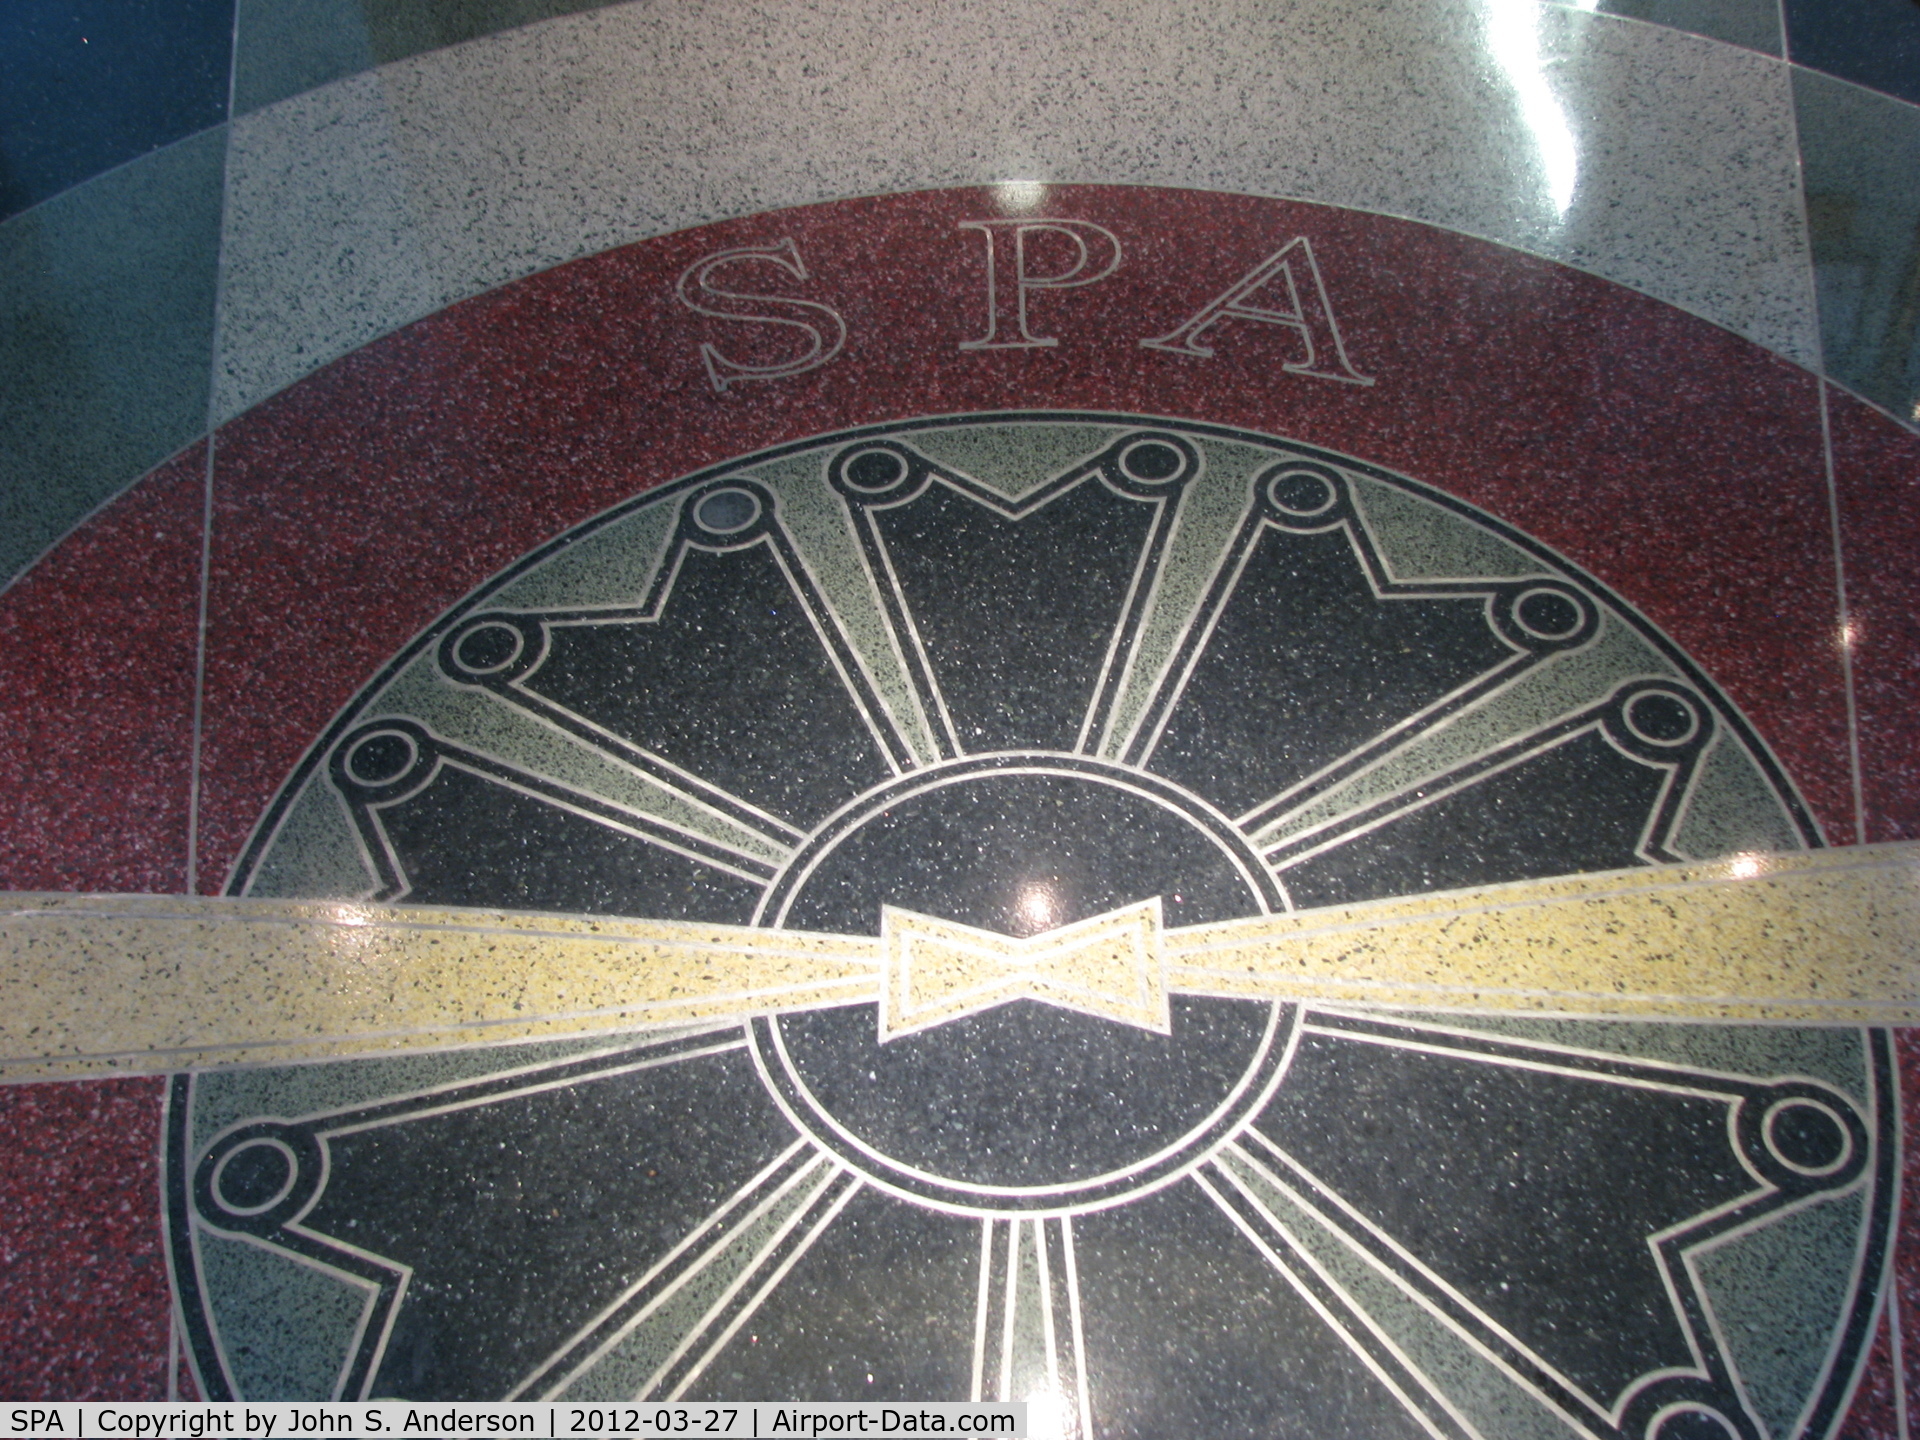 Spartanburg Downtown Memorial Airport (SPA) - Logo in floor inside main entrance.